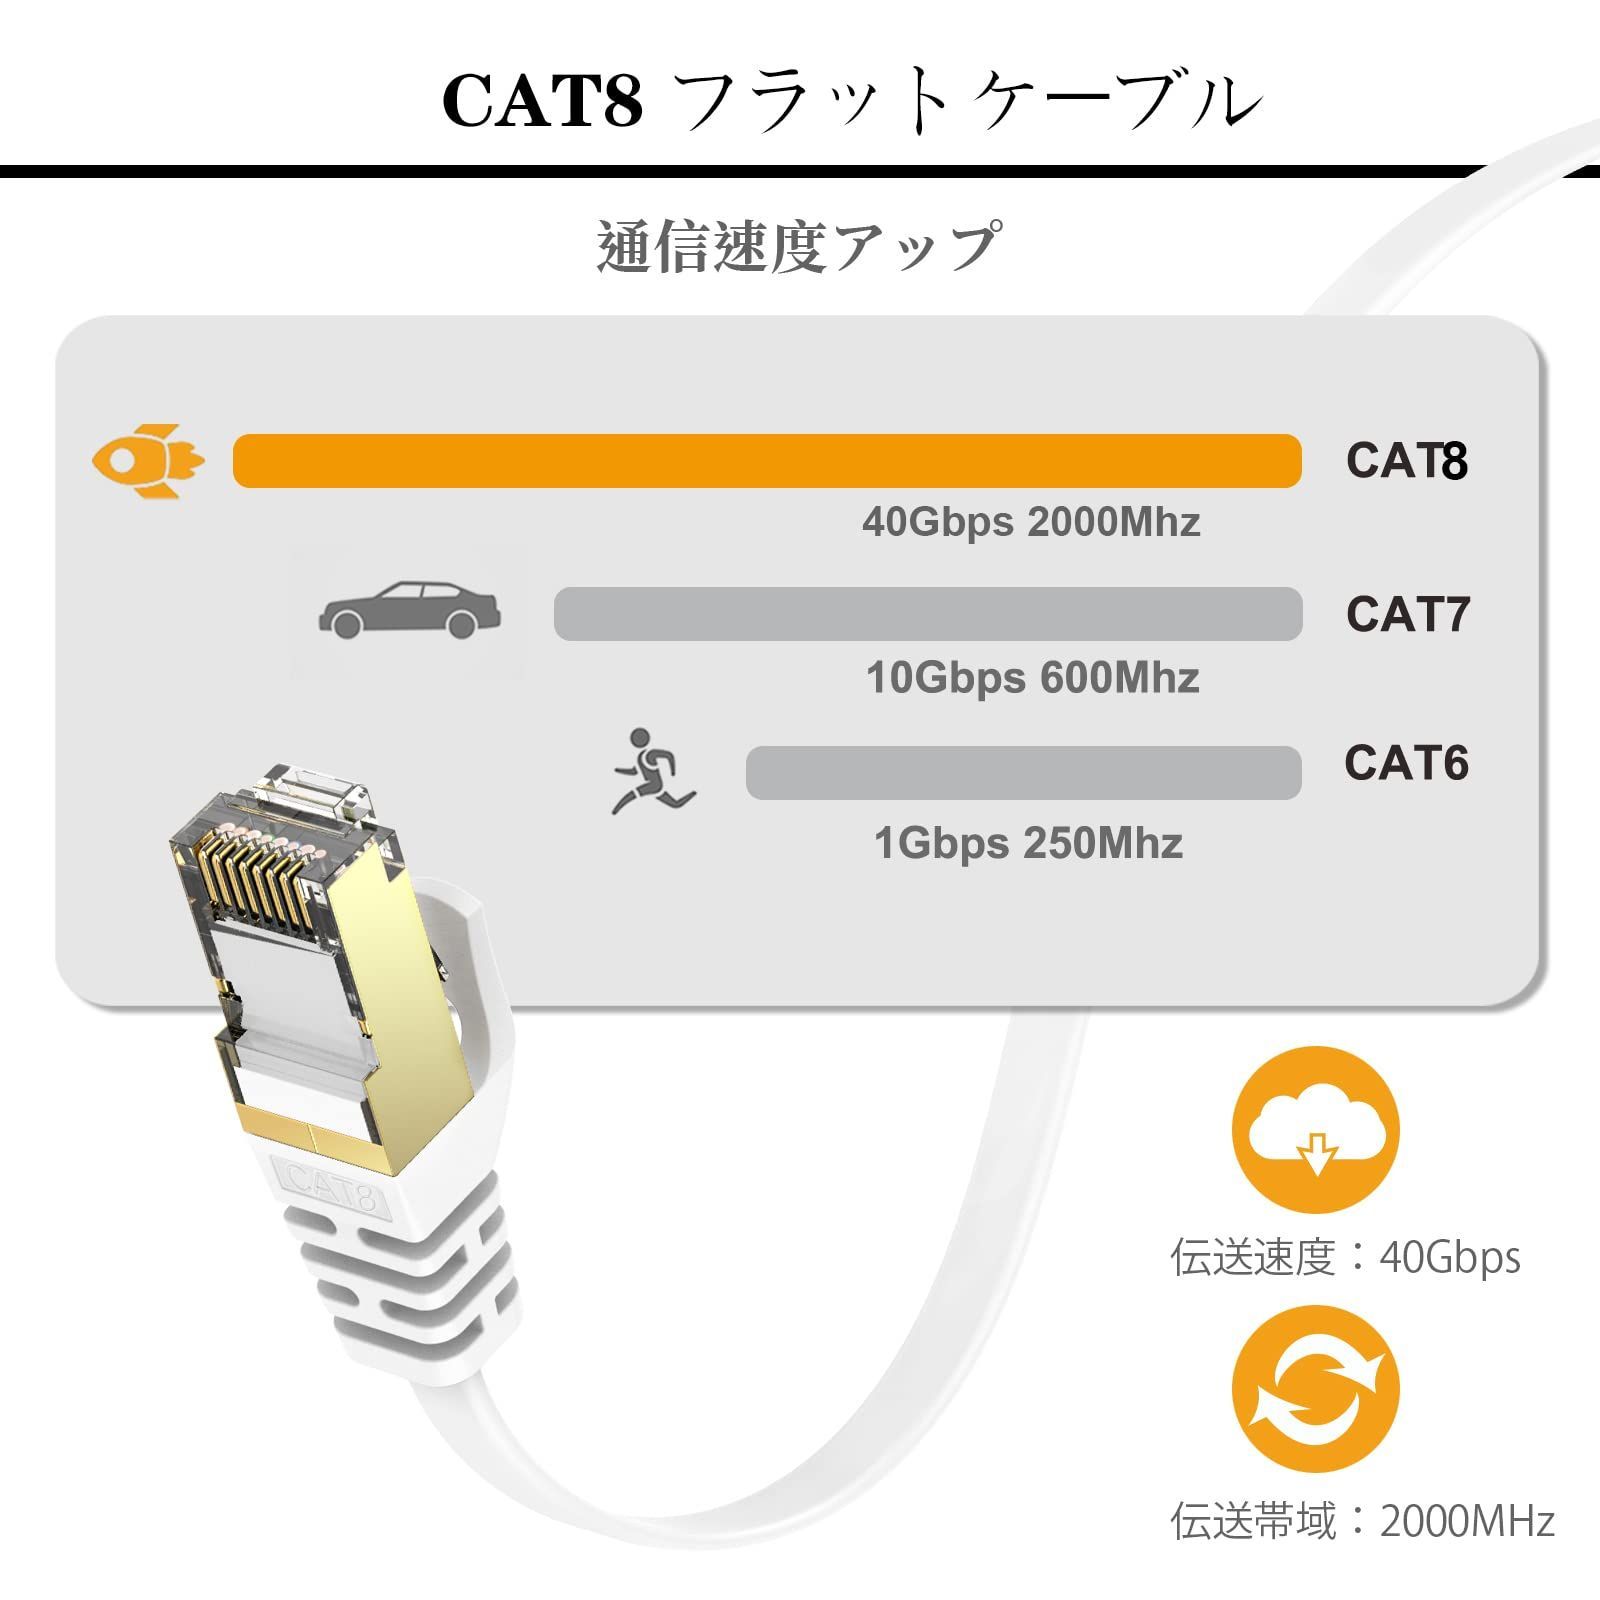 LANケーブル 15m Cat 8 標準 Siricook 有線ケーブル ランケーブル 15メートル 白 インターネット 高速 らんけーぶる